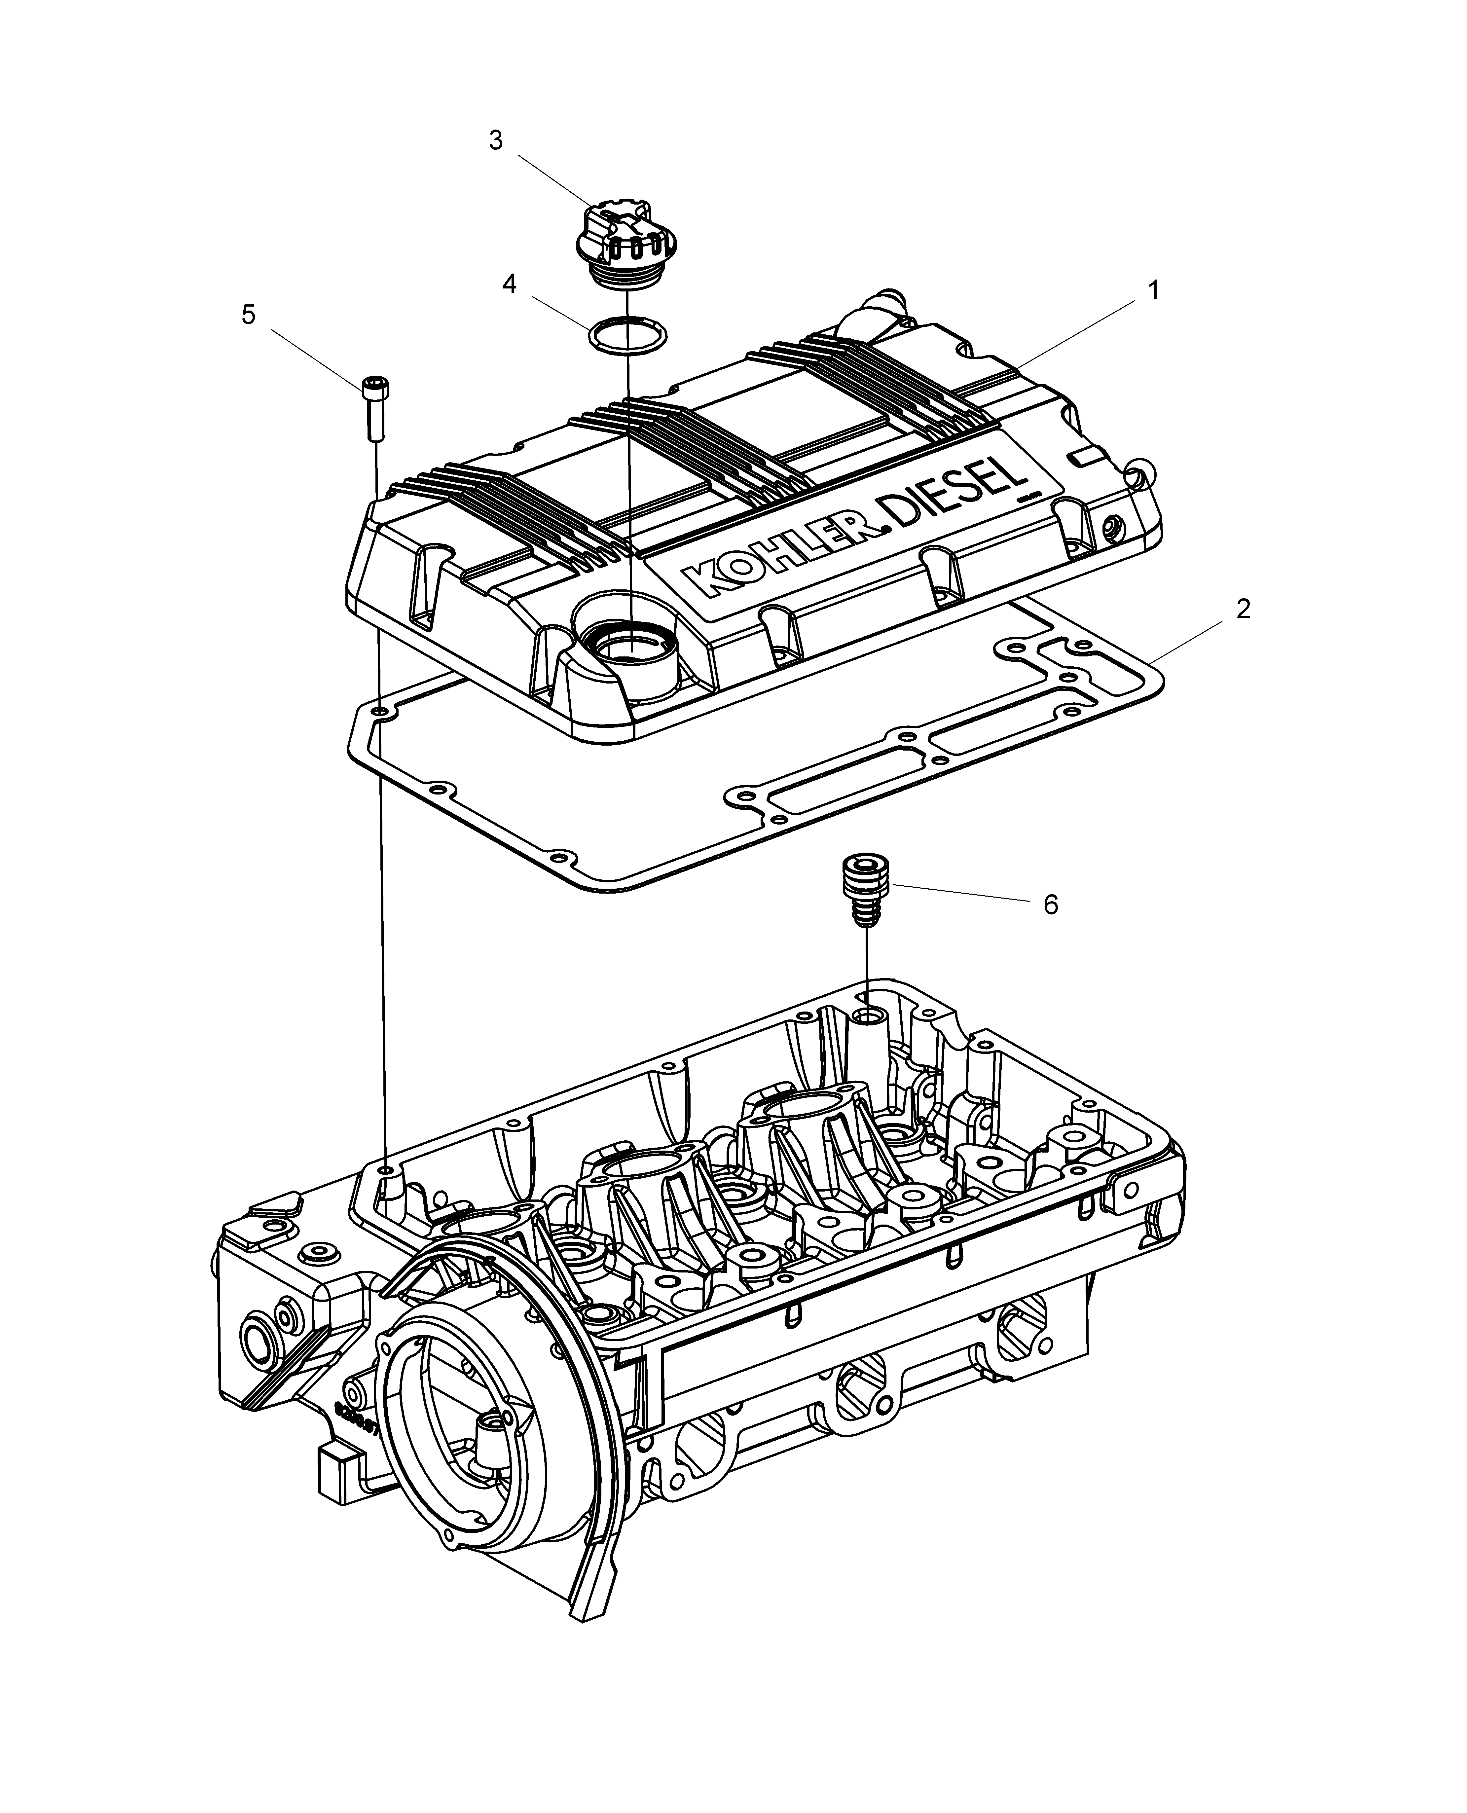 ENGINE, ROCKER ARMS COVER and OIL FILLER - R16RTAD1A1/E1 (49RGRROCKERCVR15DSL)